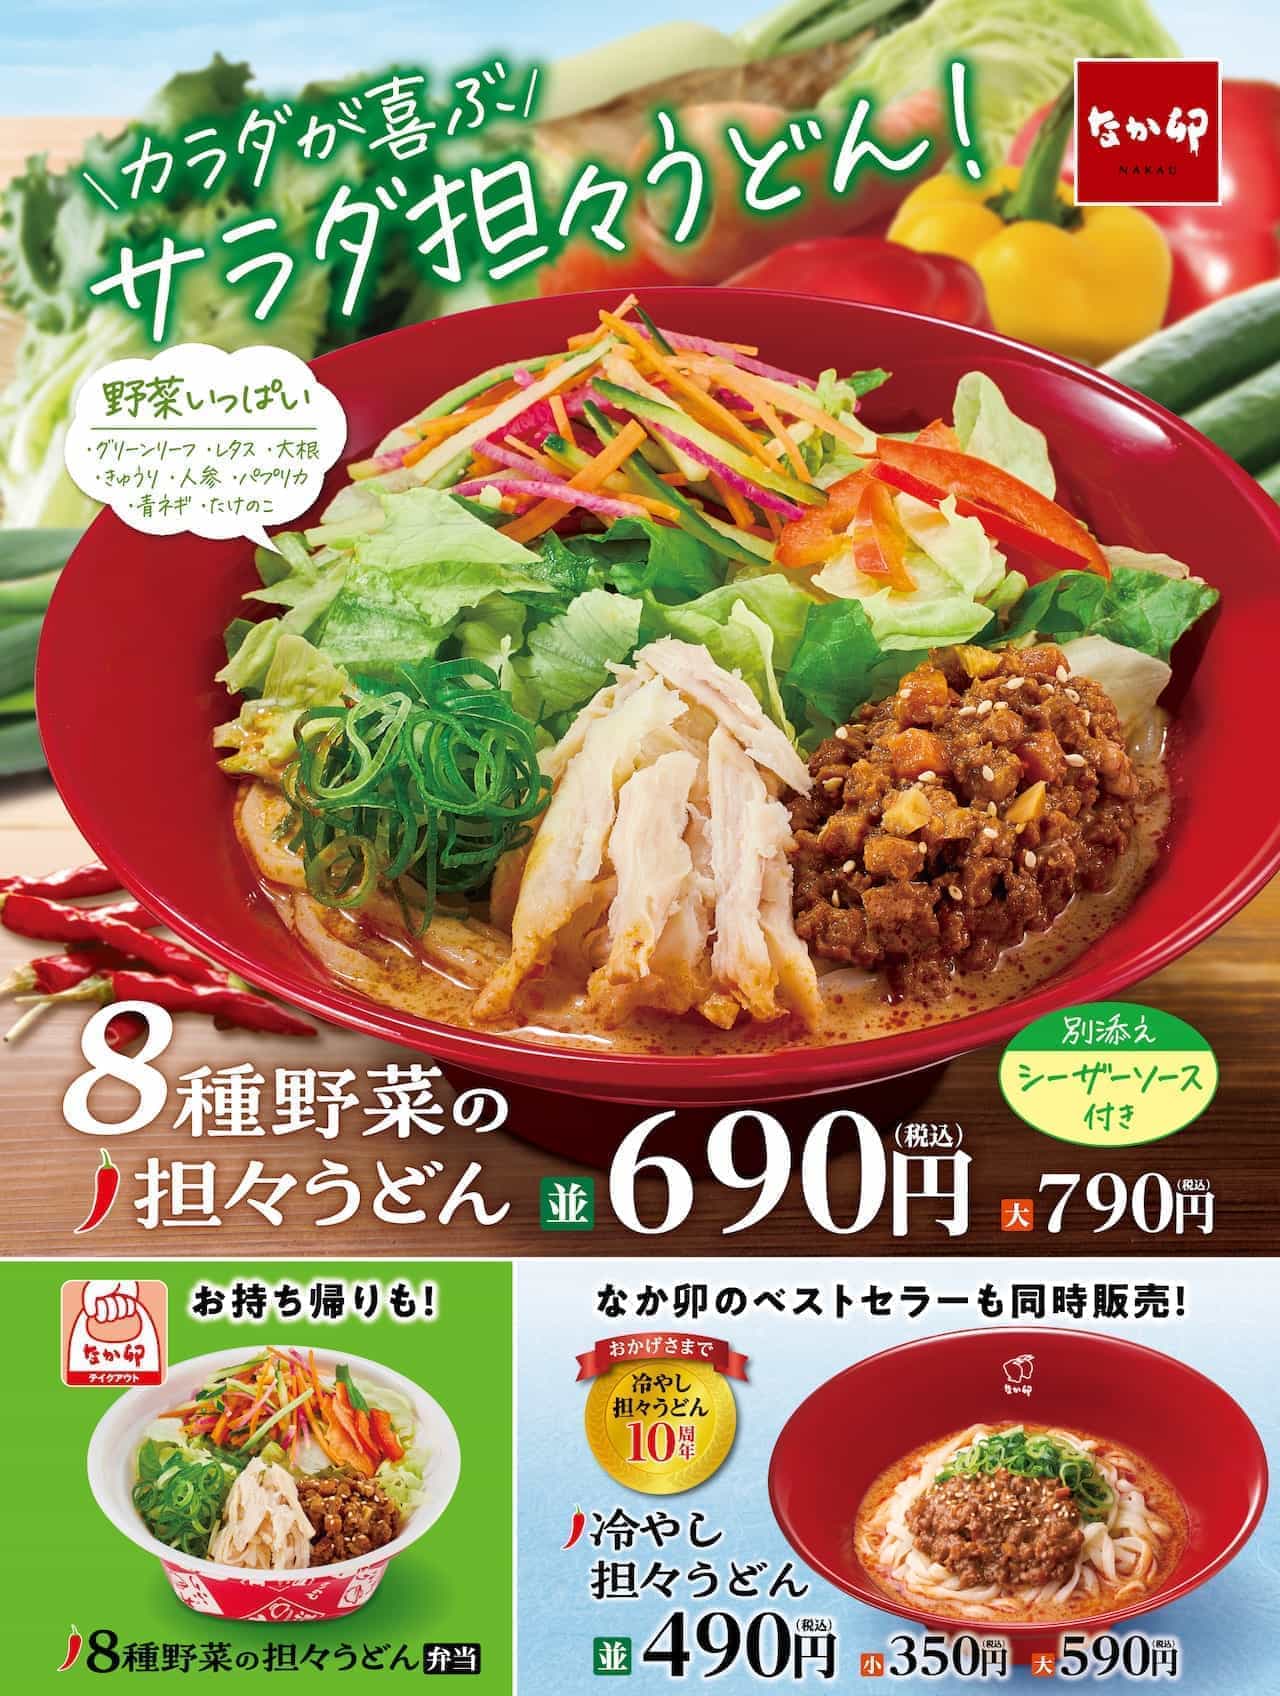 Nakau "8 kinds of vegetables" and "cold udon noodles".